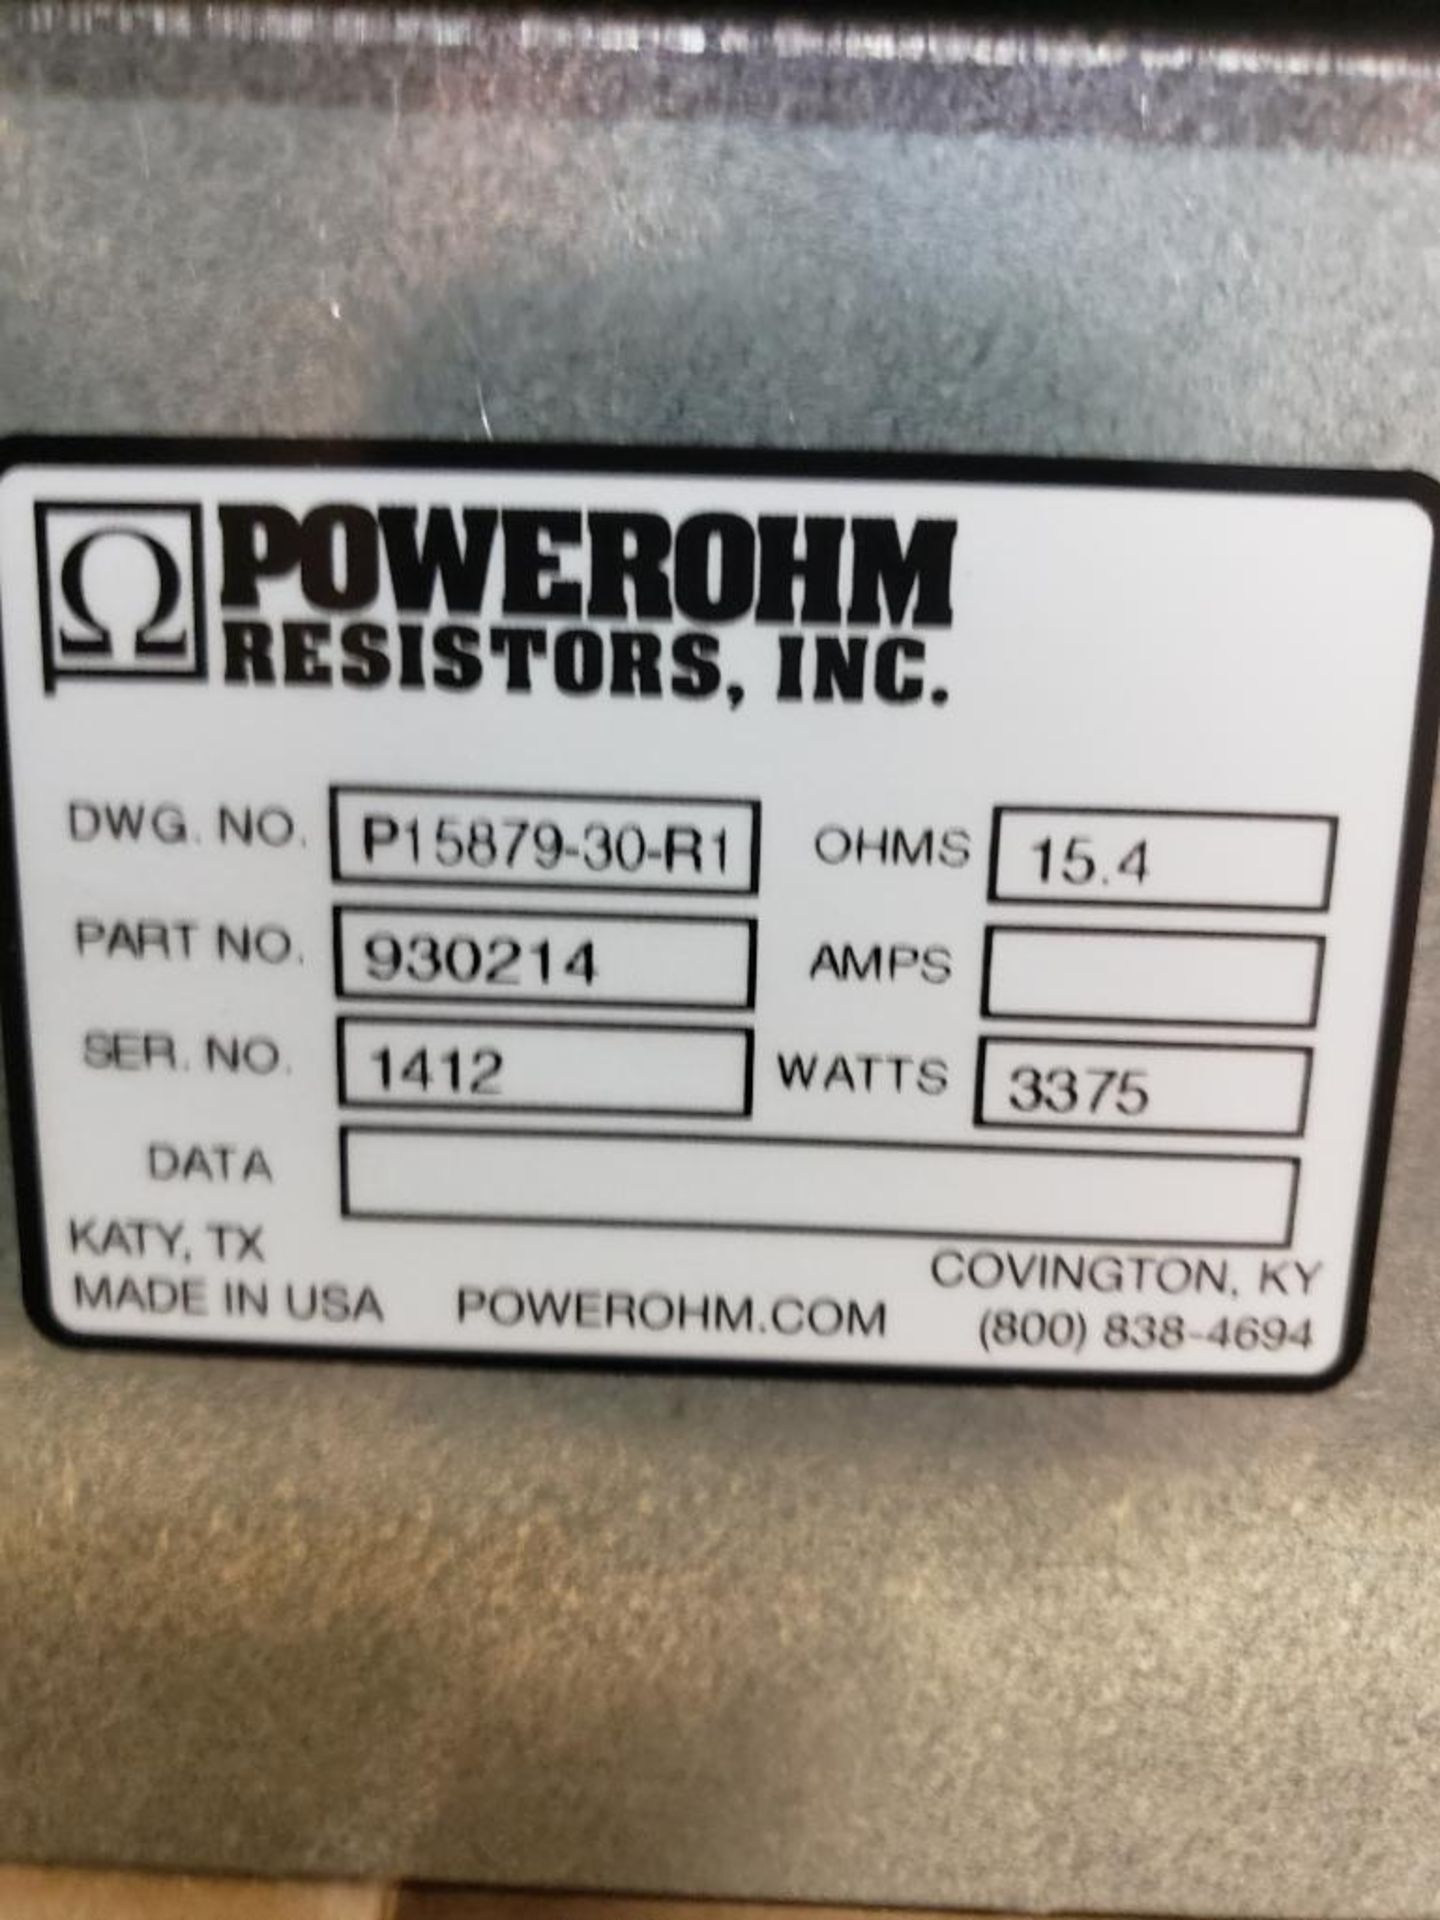 Powerohm Resistors Inc Hubbell 3375watt brake. 15.4ohm. Part number 930214. New. - Image 3 of 4